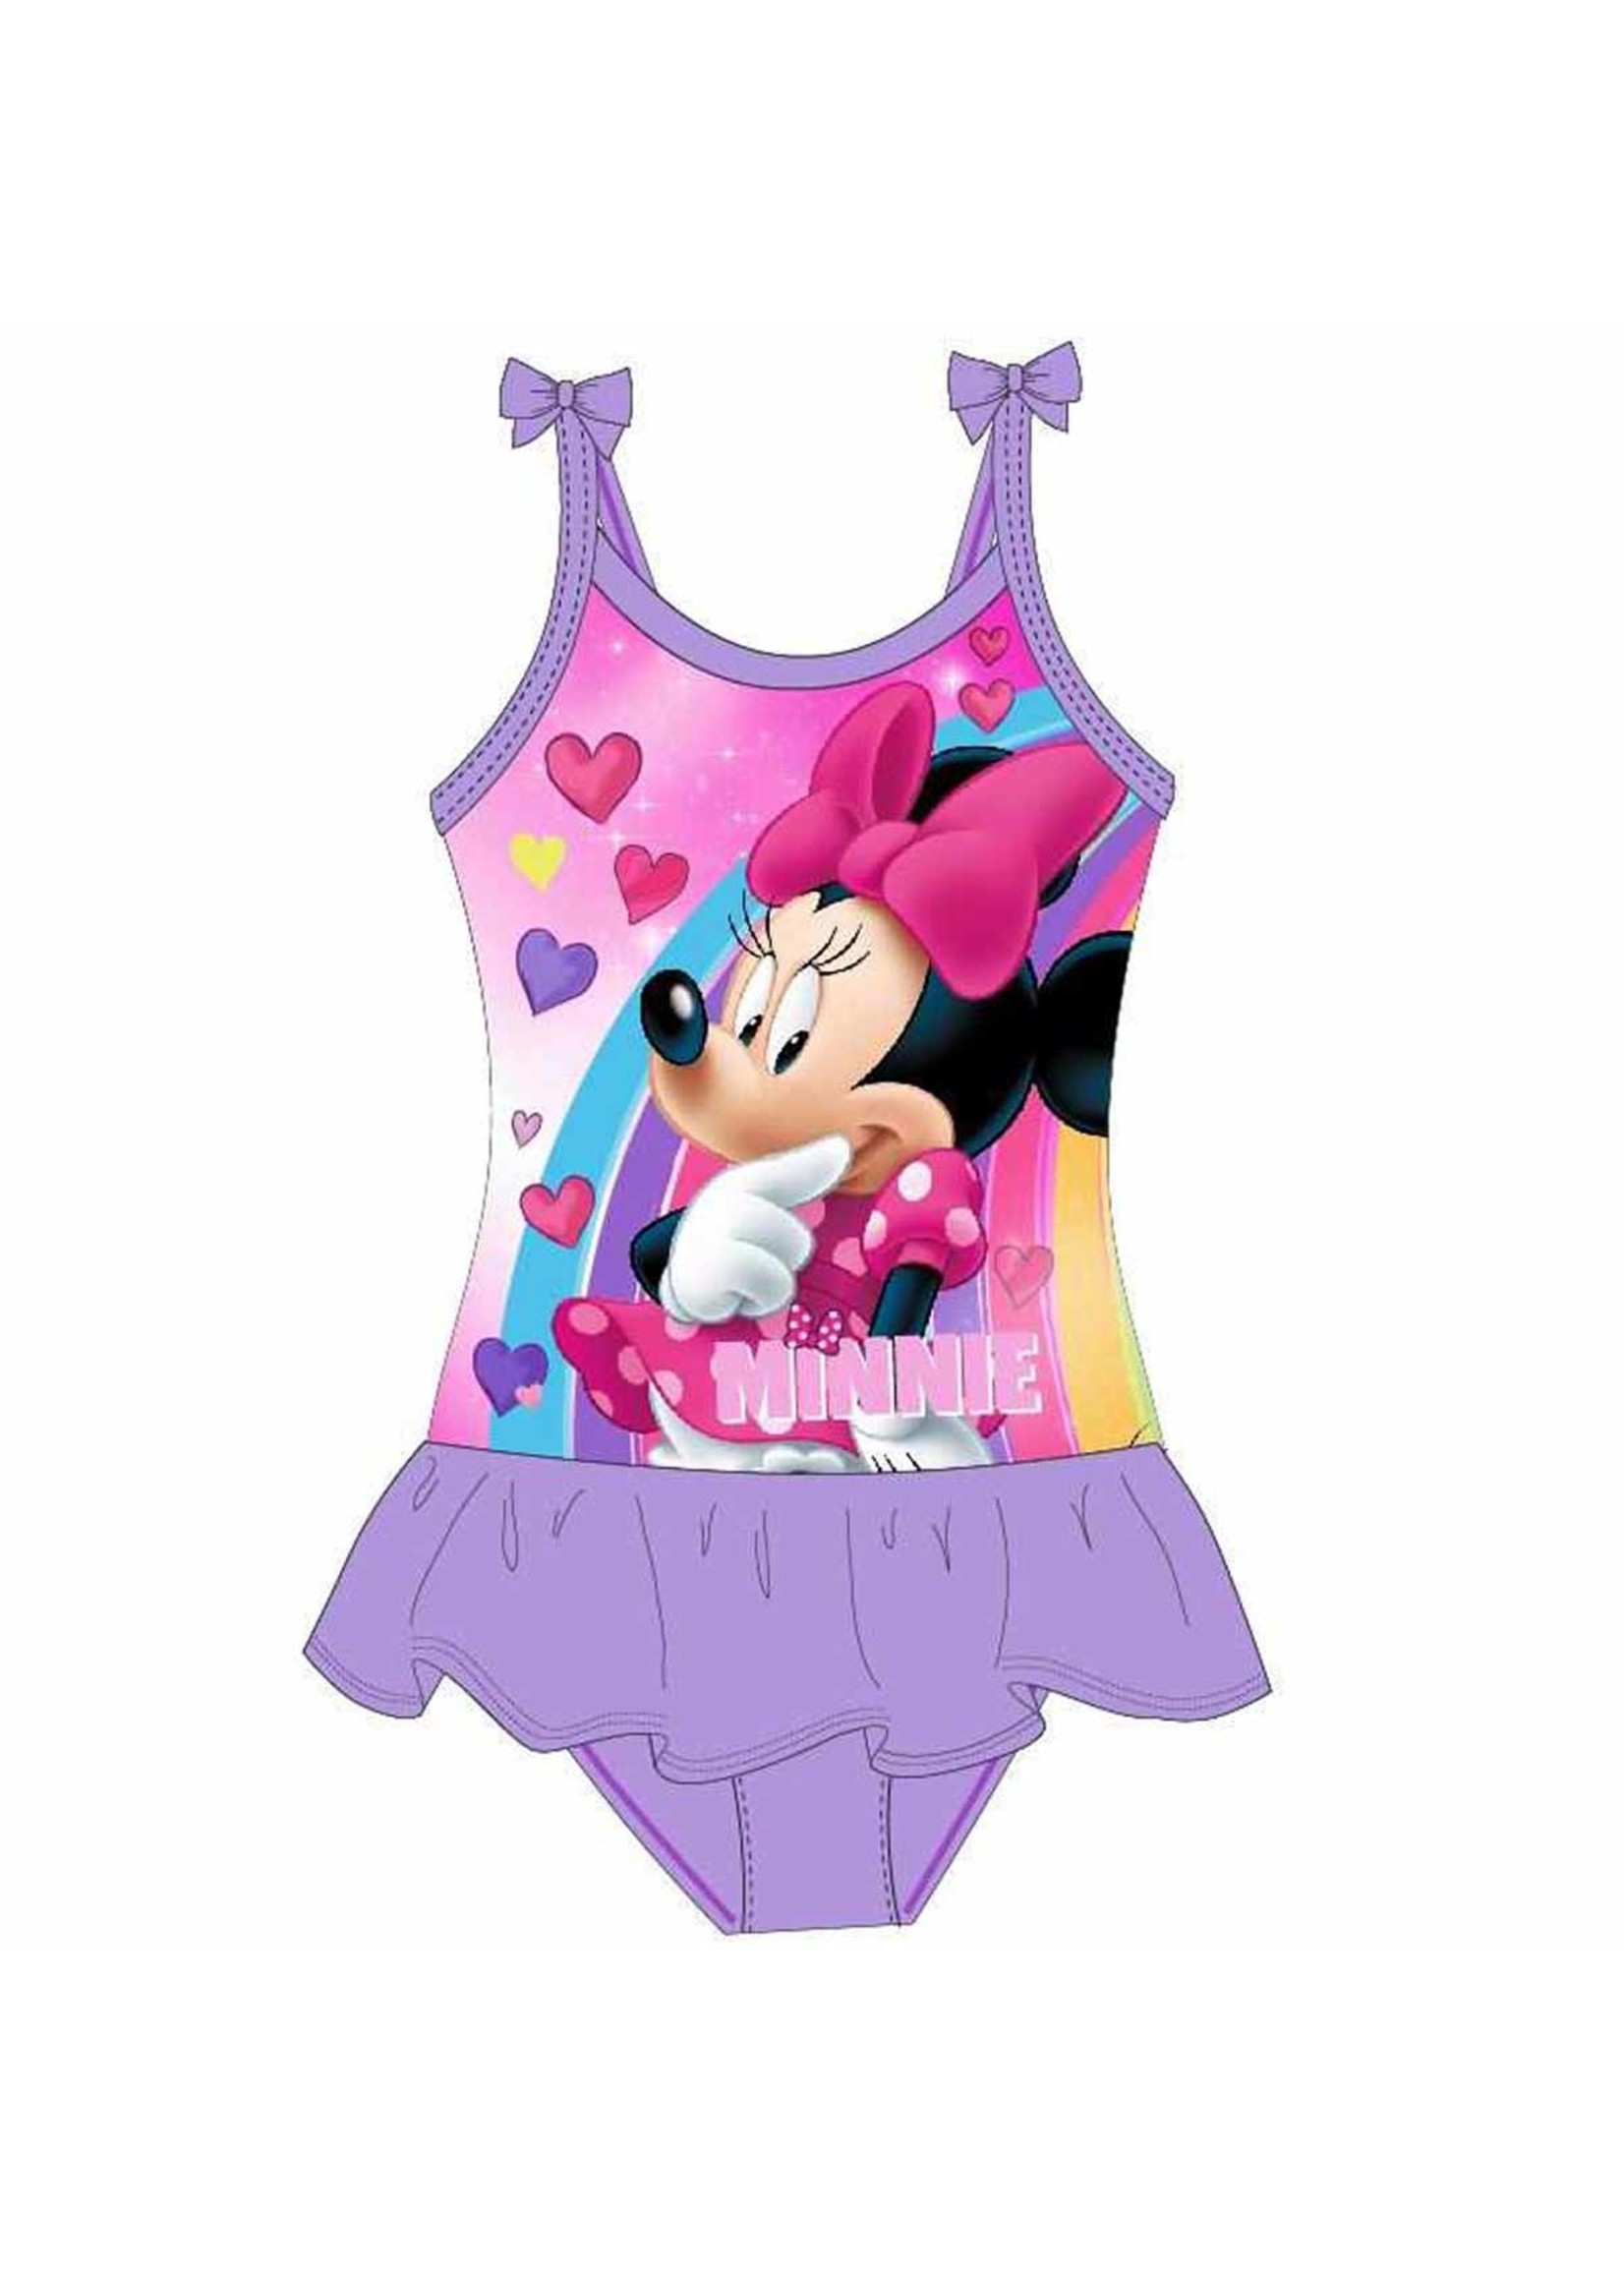 Disney Minnie Mouse badpak van Disney lila